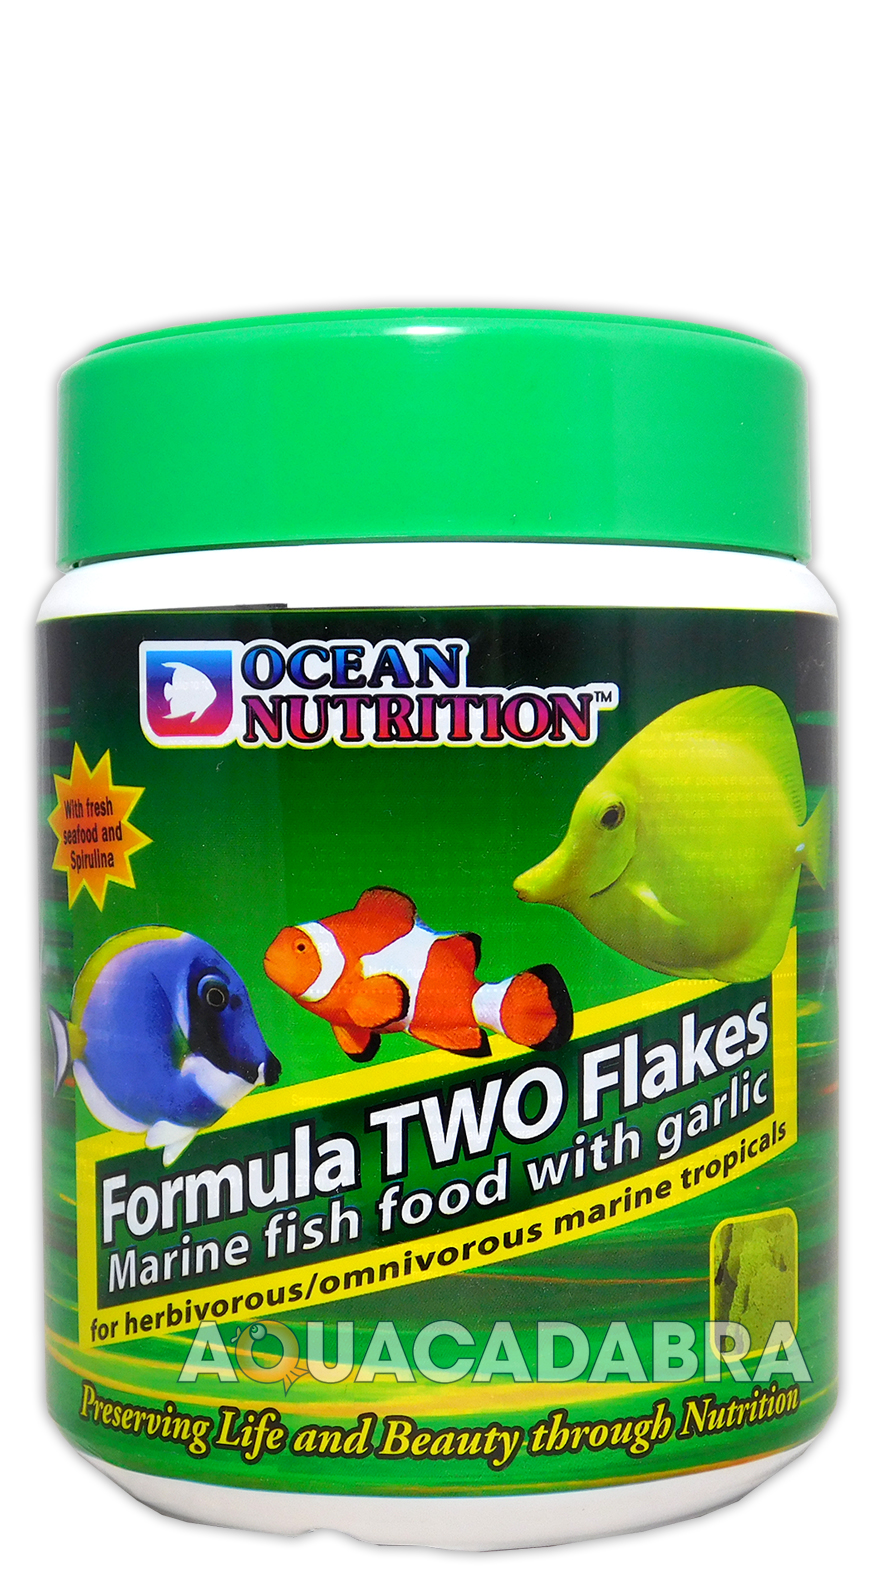 OCEAN NUTRITION FORMULA TWO MARINE FLAKE HERBIVORE FISH FOOD ALGAE